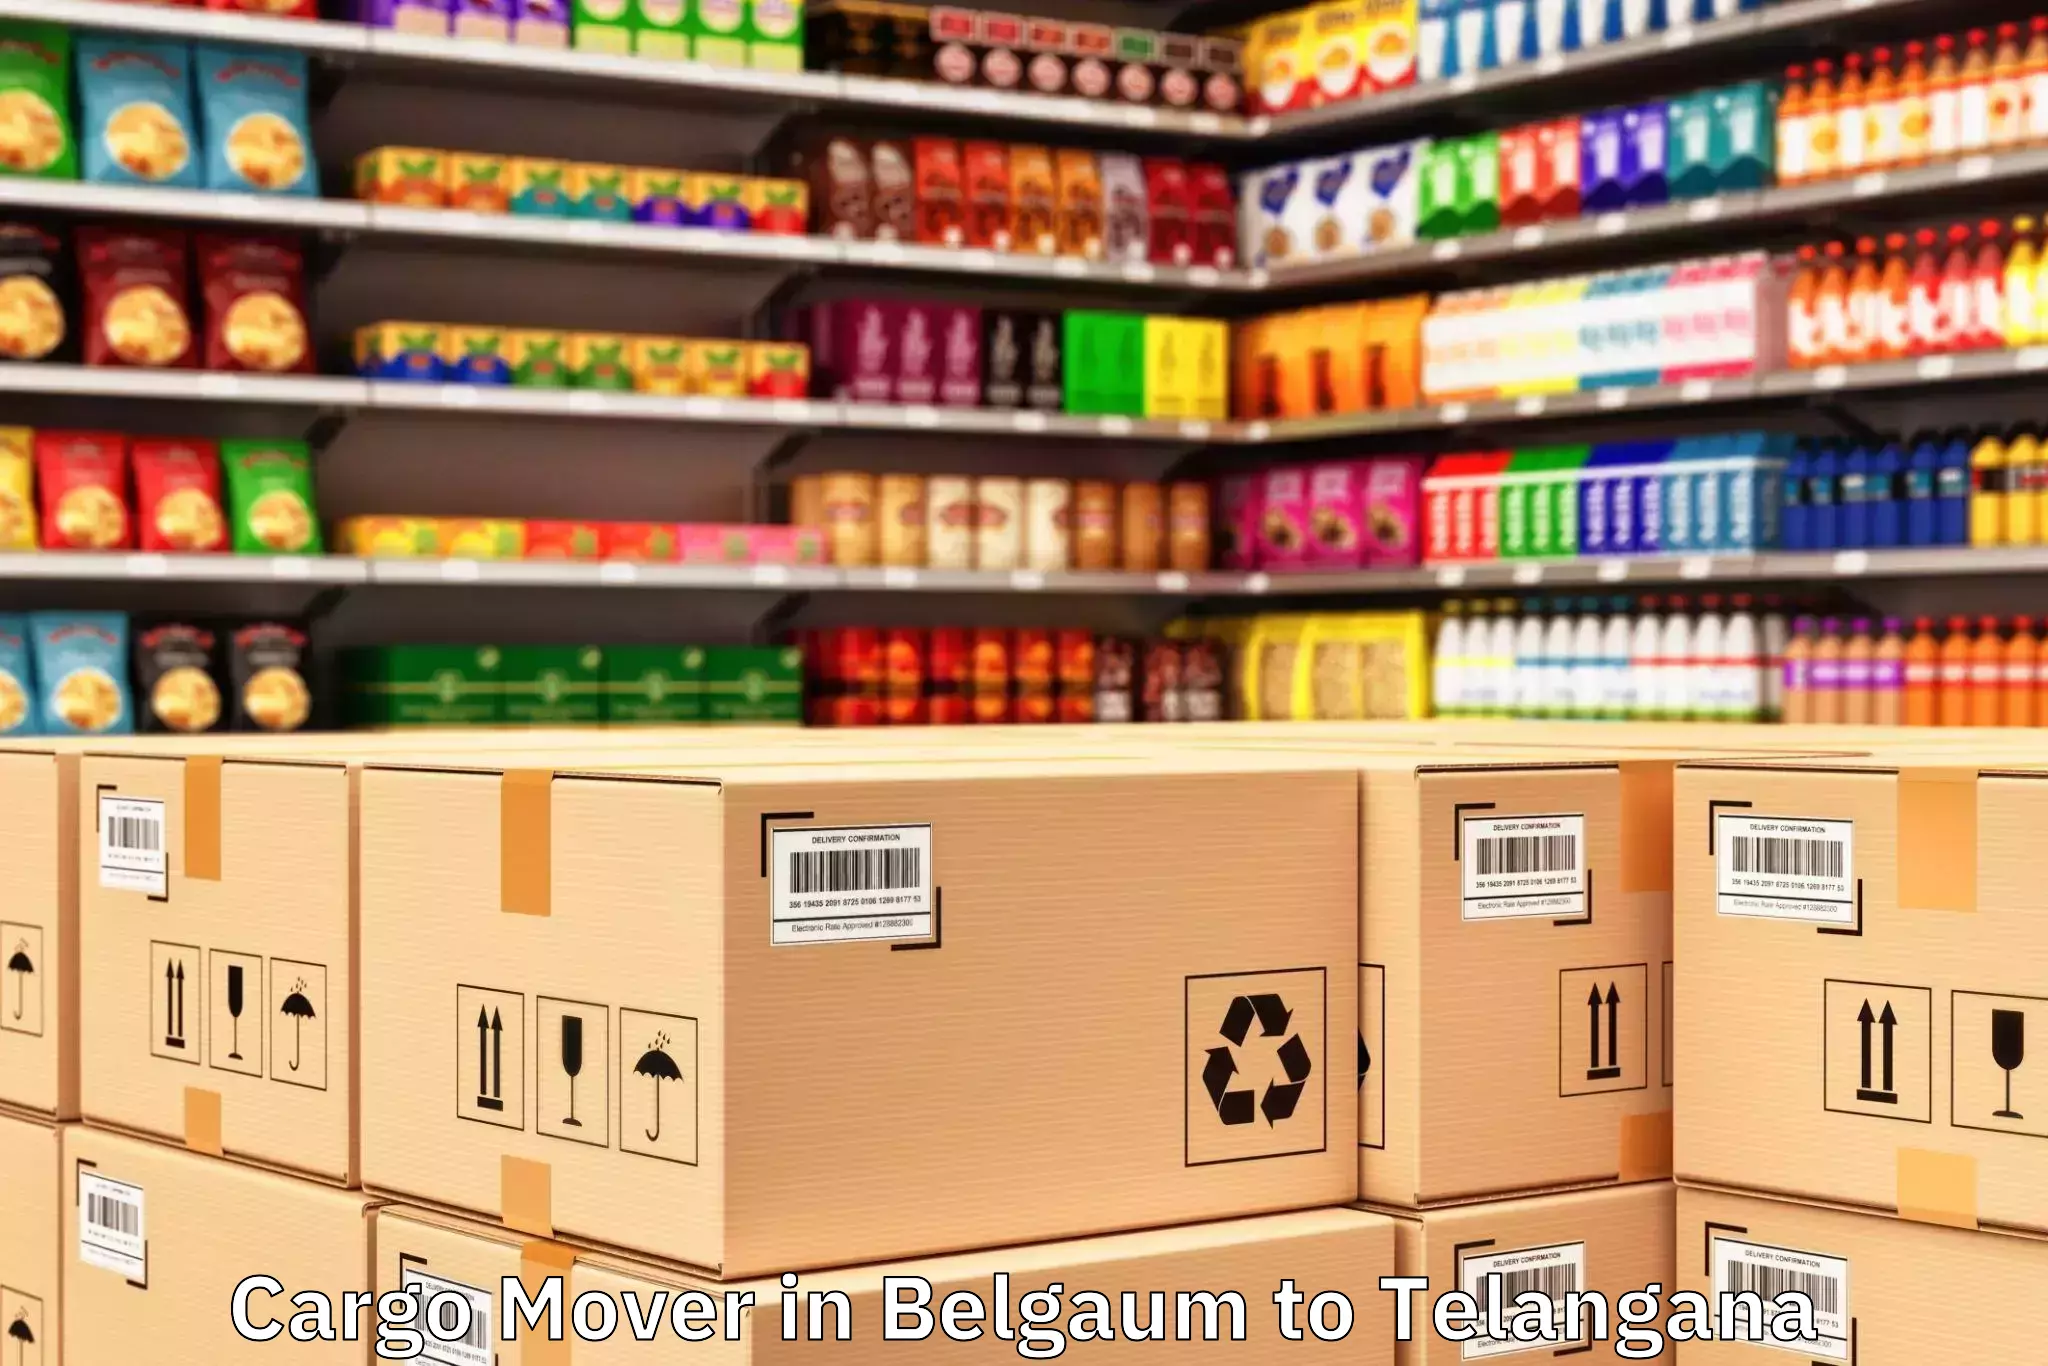 Belgaum to Amangal Cargo Mover Booking